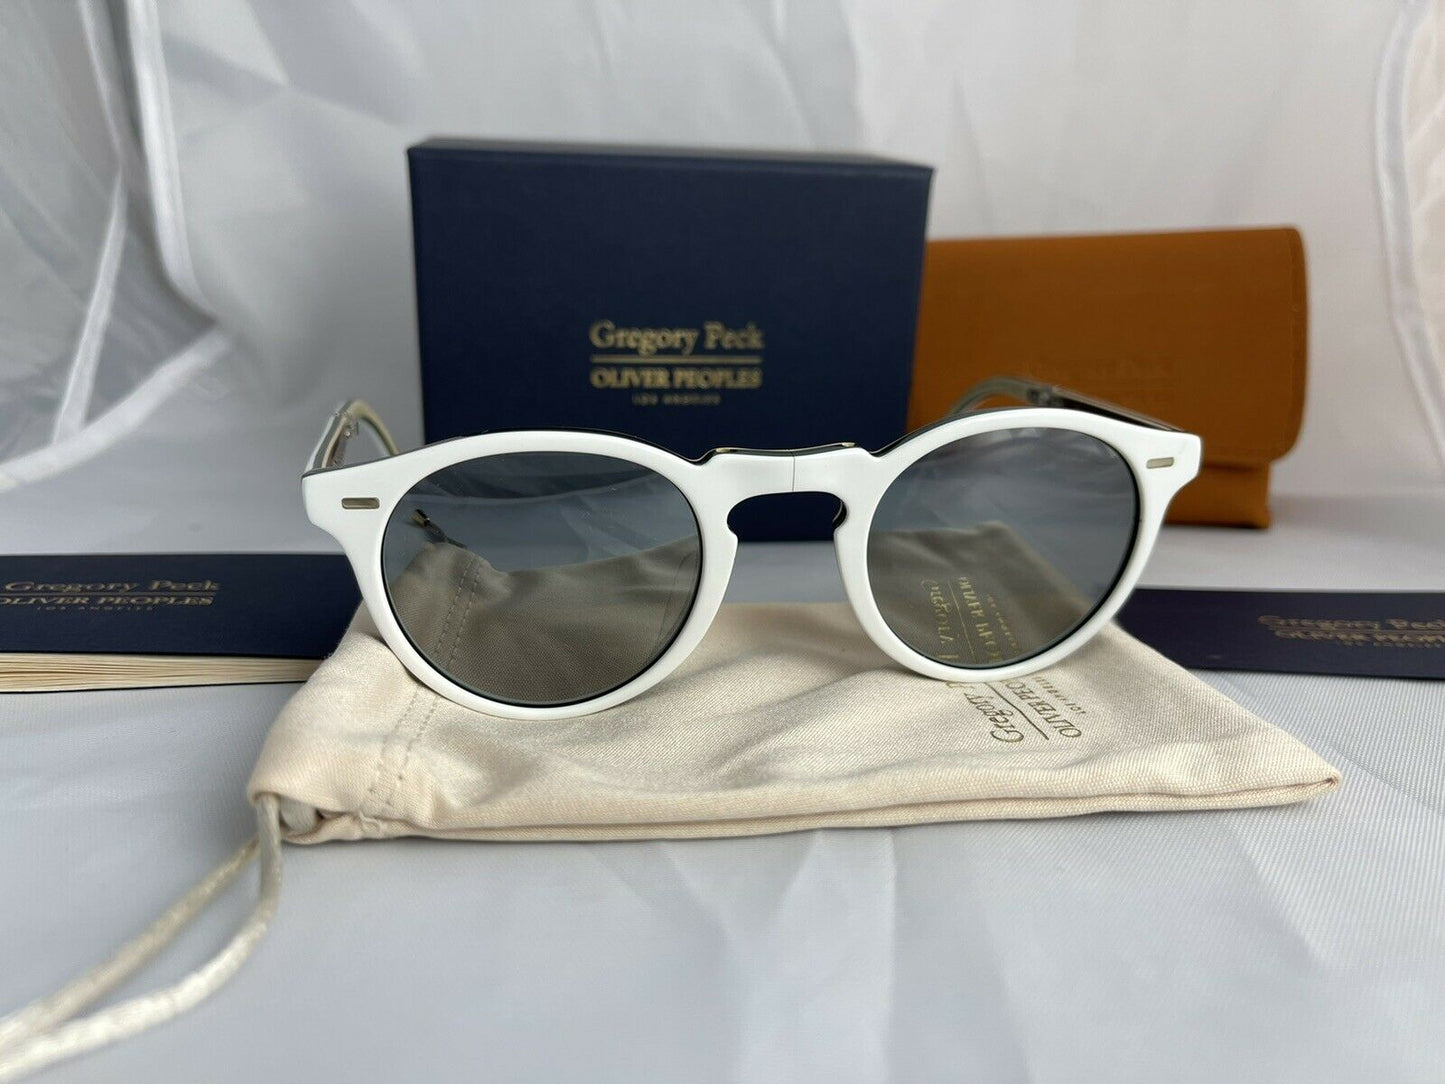 Oliver peoples Gregory Peck OV5456SU 1962 Folding sunglasses White Silver Mirror